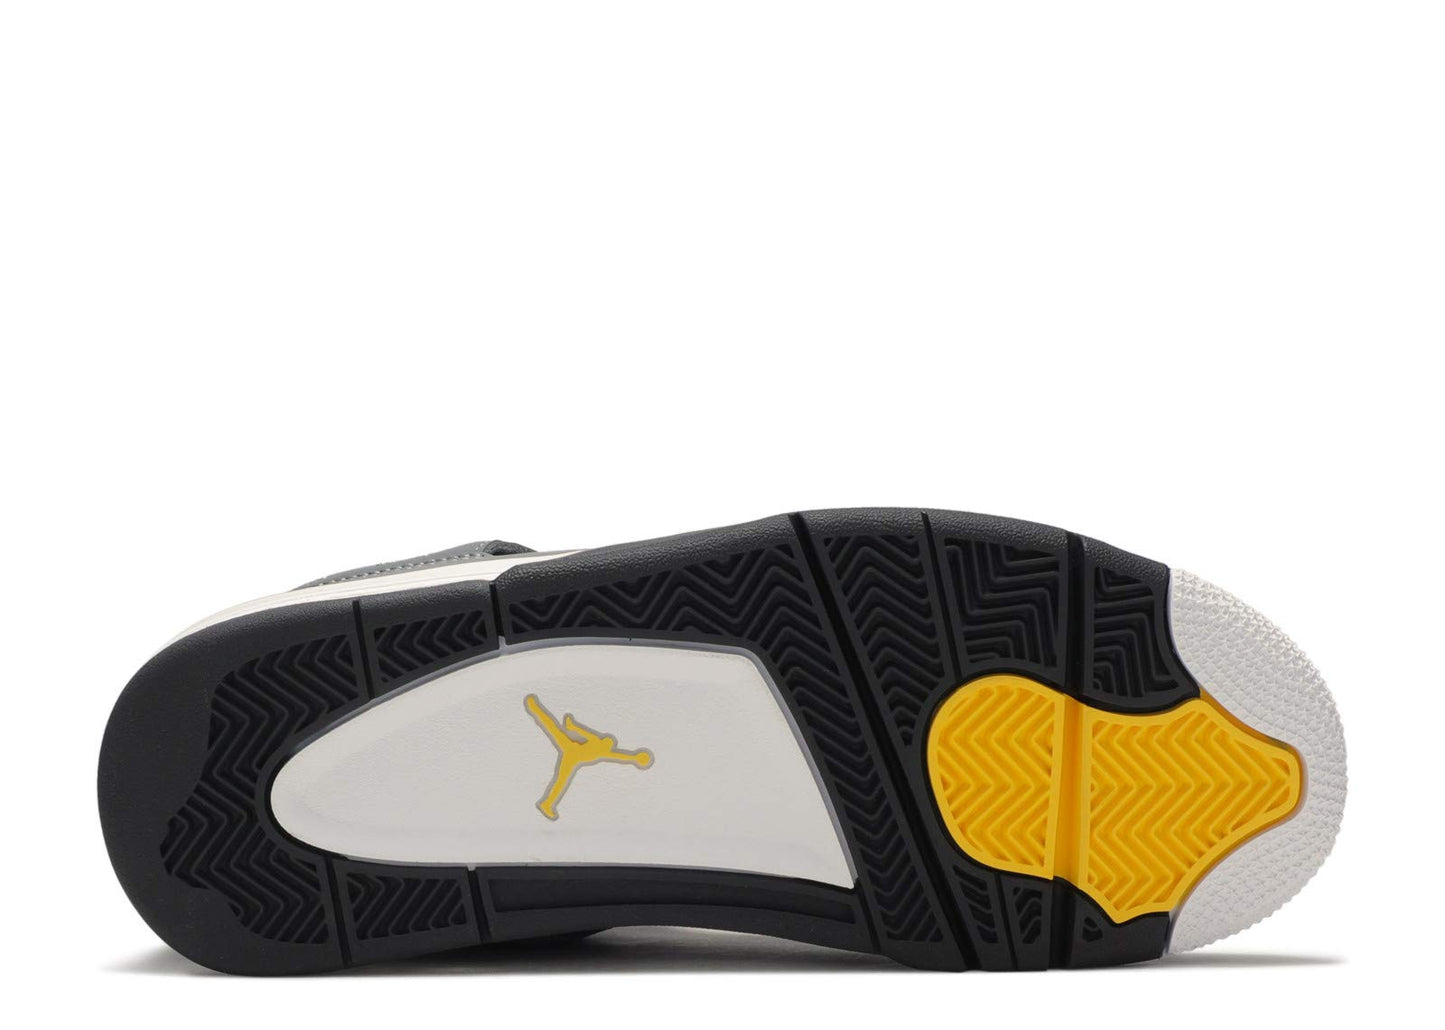 Nike Air Jordan 4 Retro Cool Grey Kid's Size 7Y GS 408452-007 Chrome-Dark Charcoal